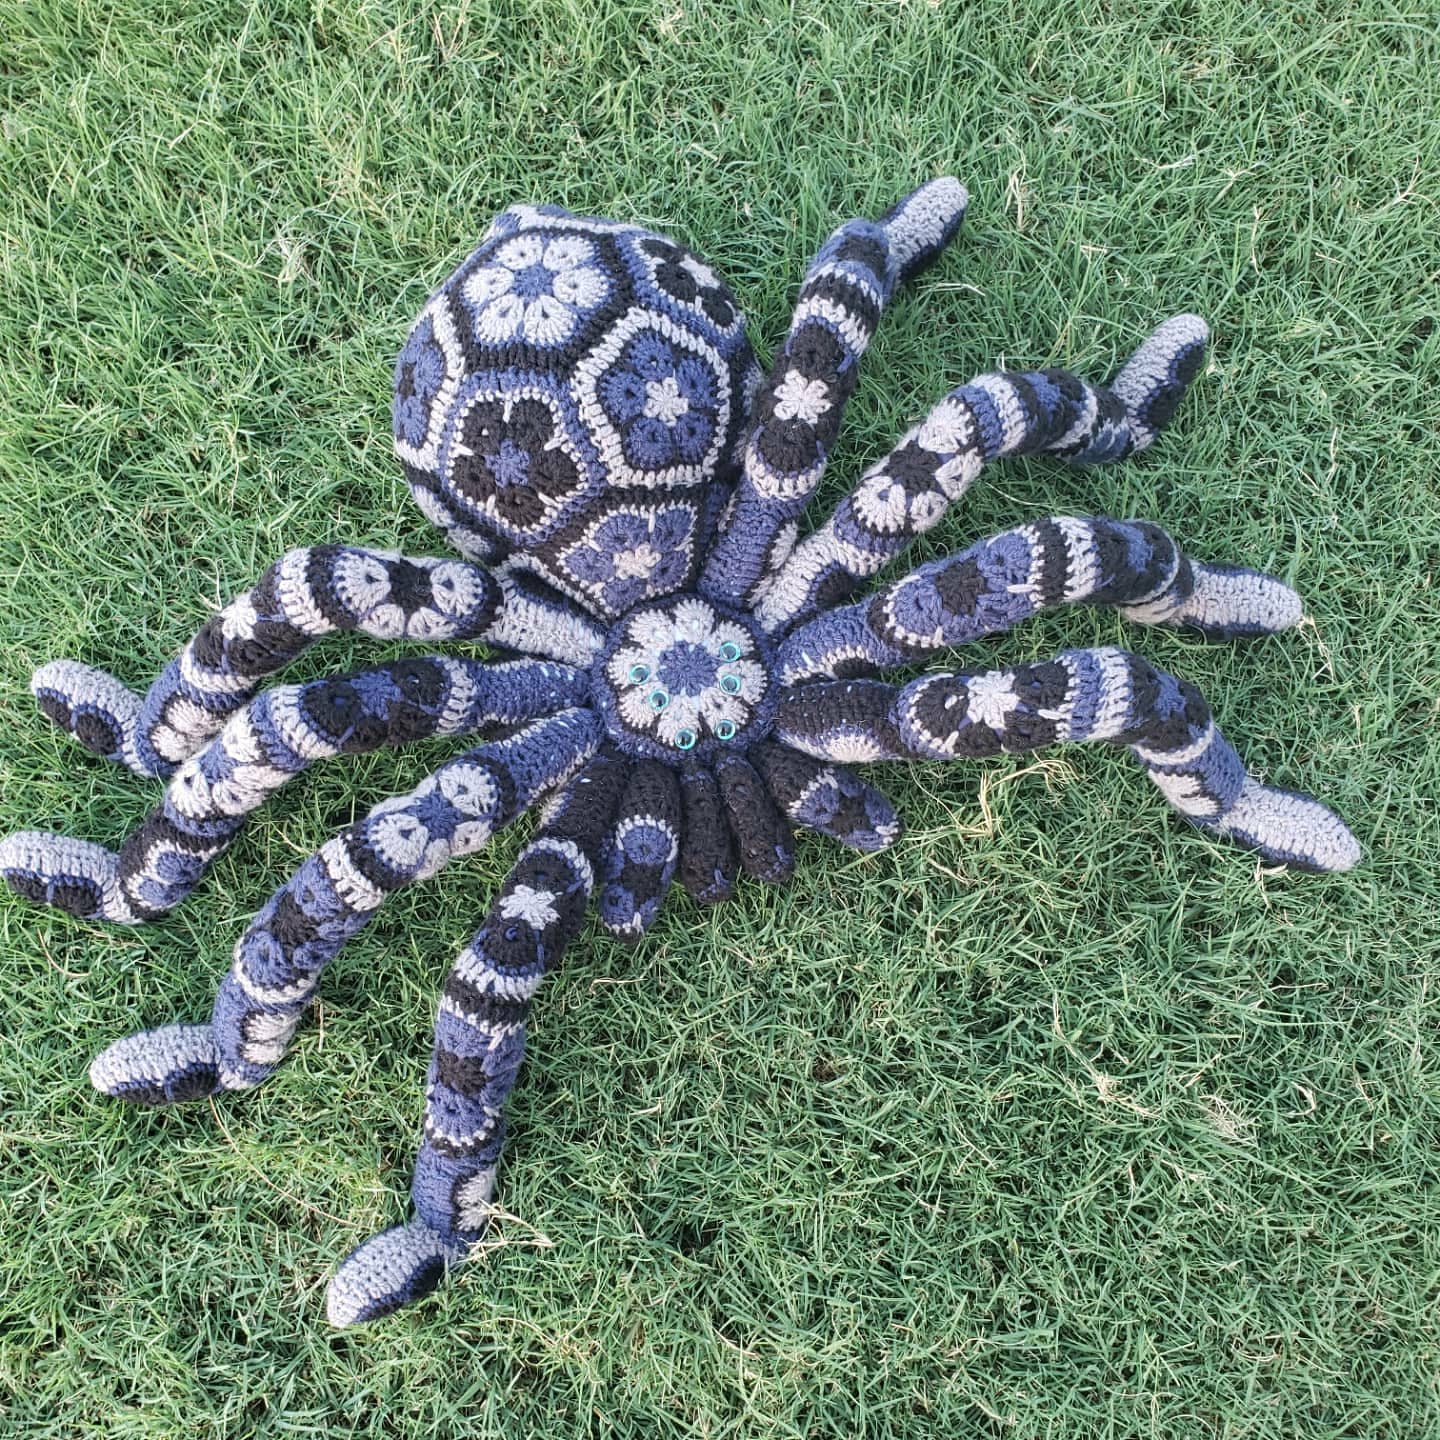 Giant African flower spider